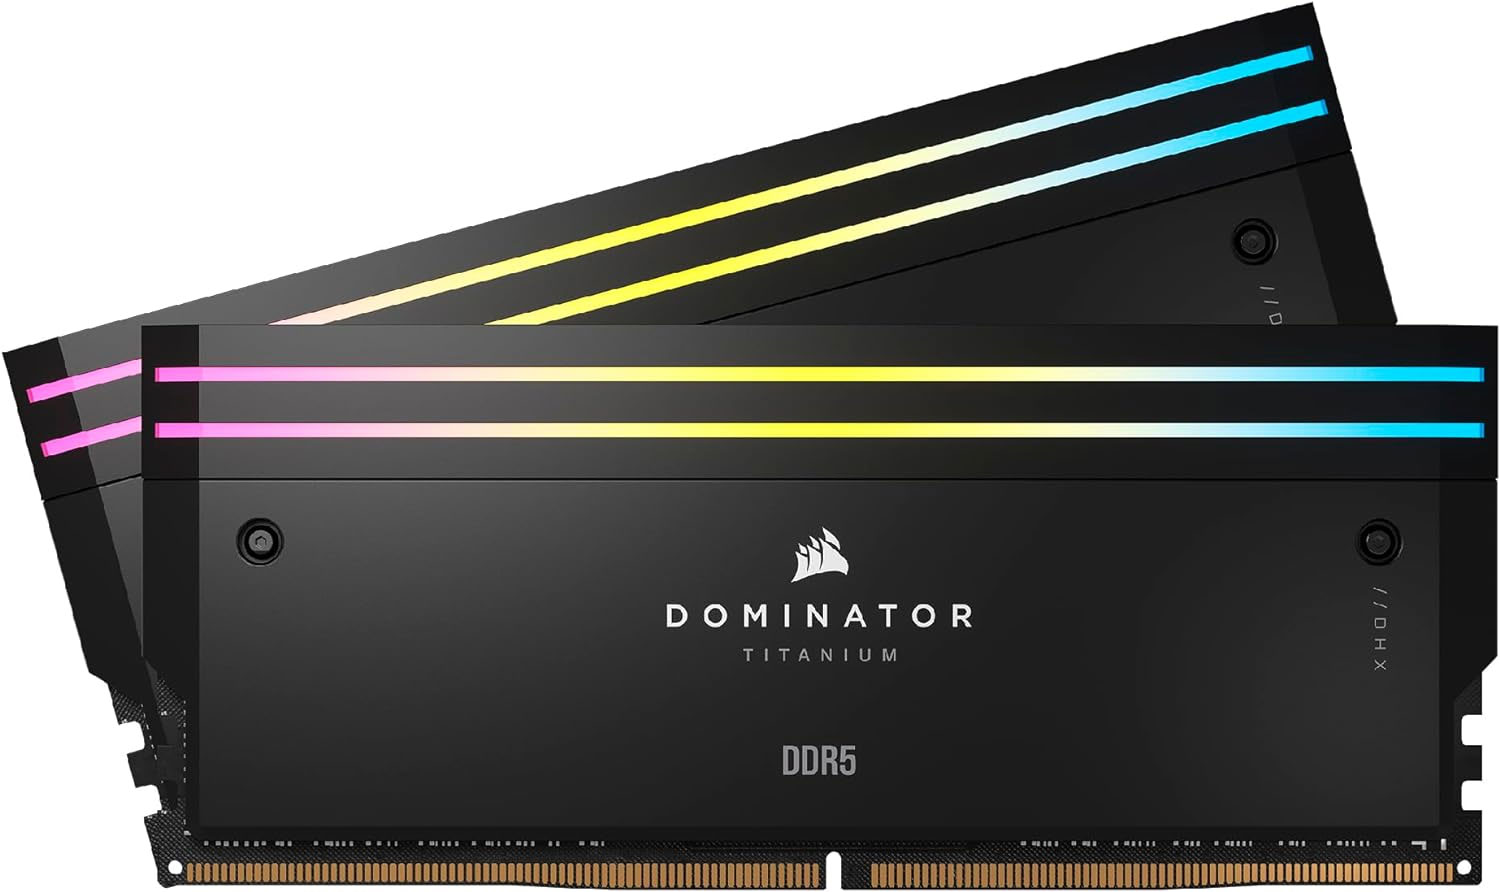 Corsair Dominator Titanium memory kit.